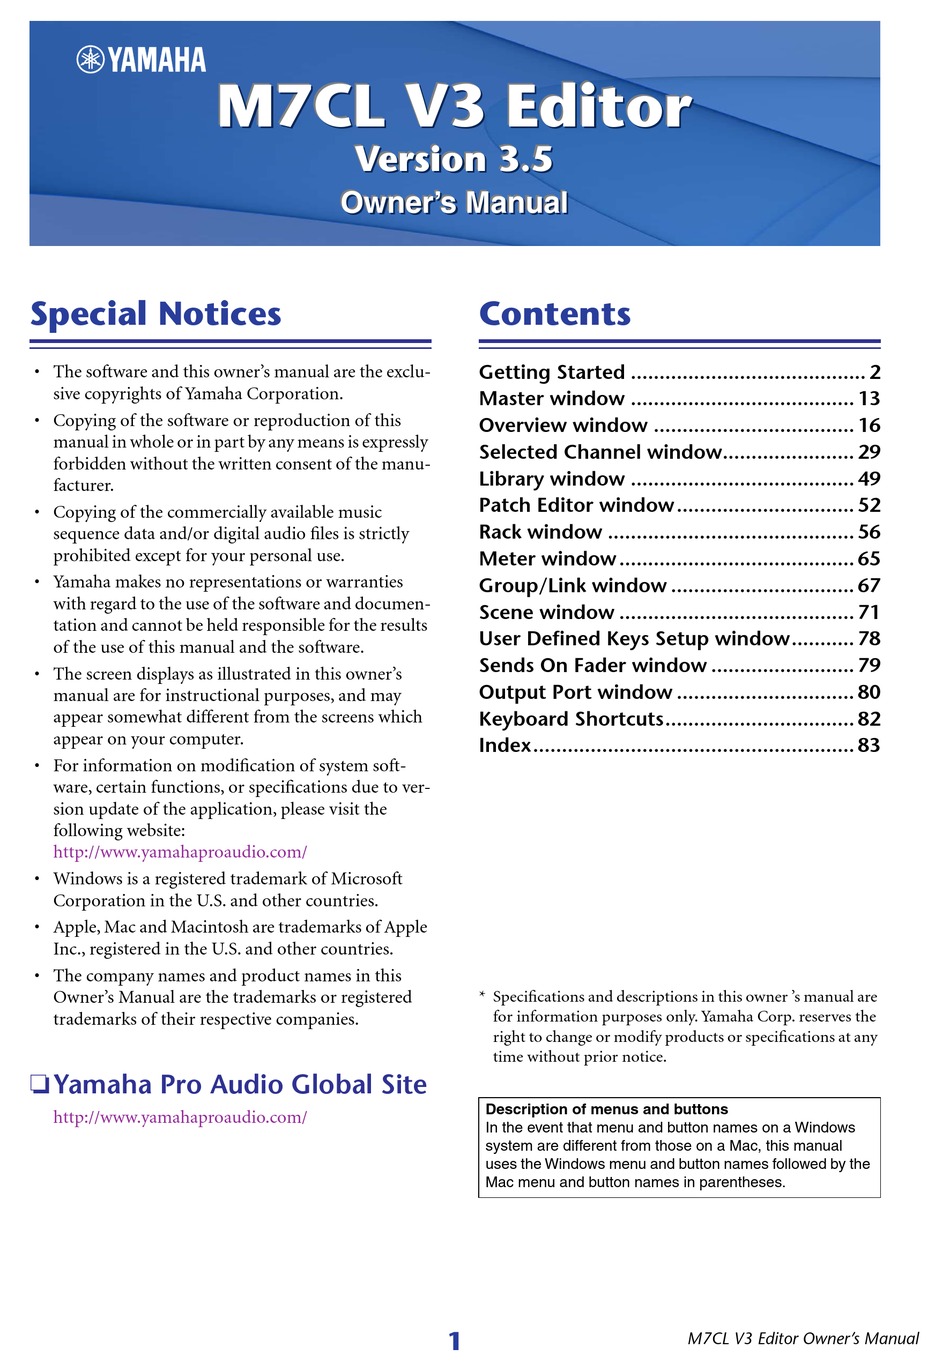 YAMAHA M7CL OWNER'S MANUAL Pdf Download | ManualsLib